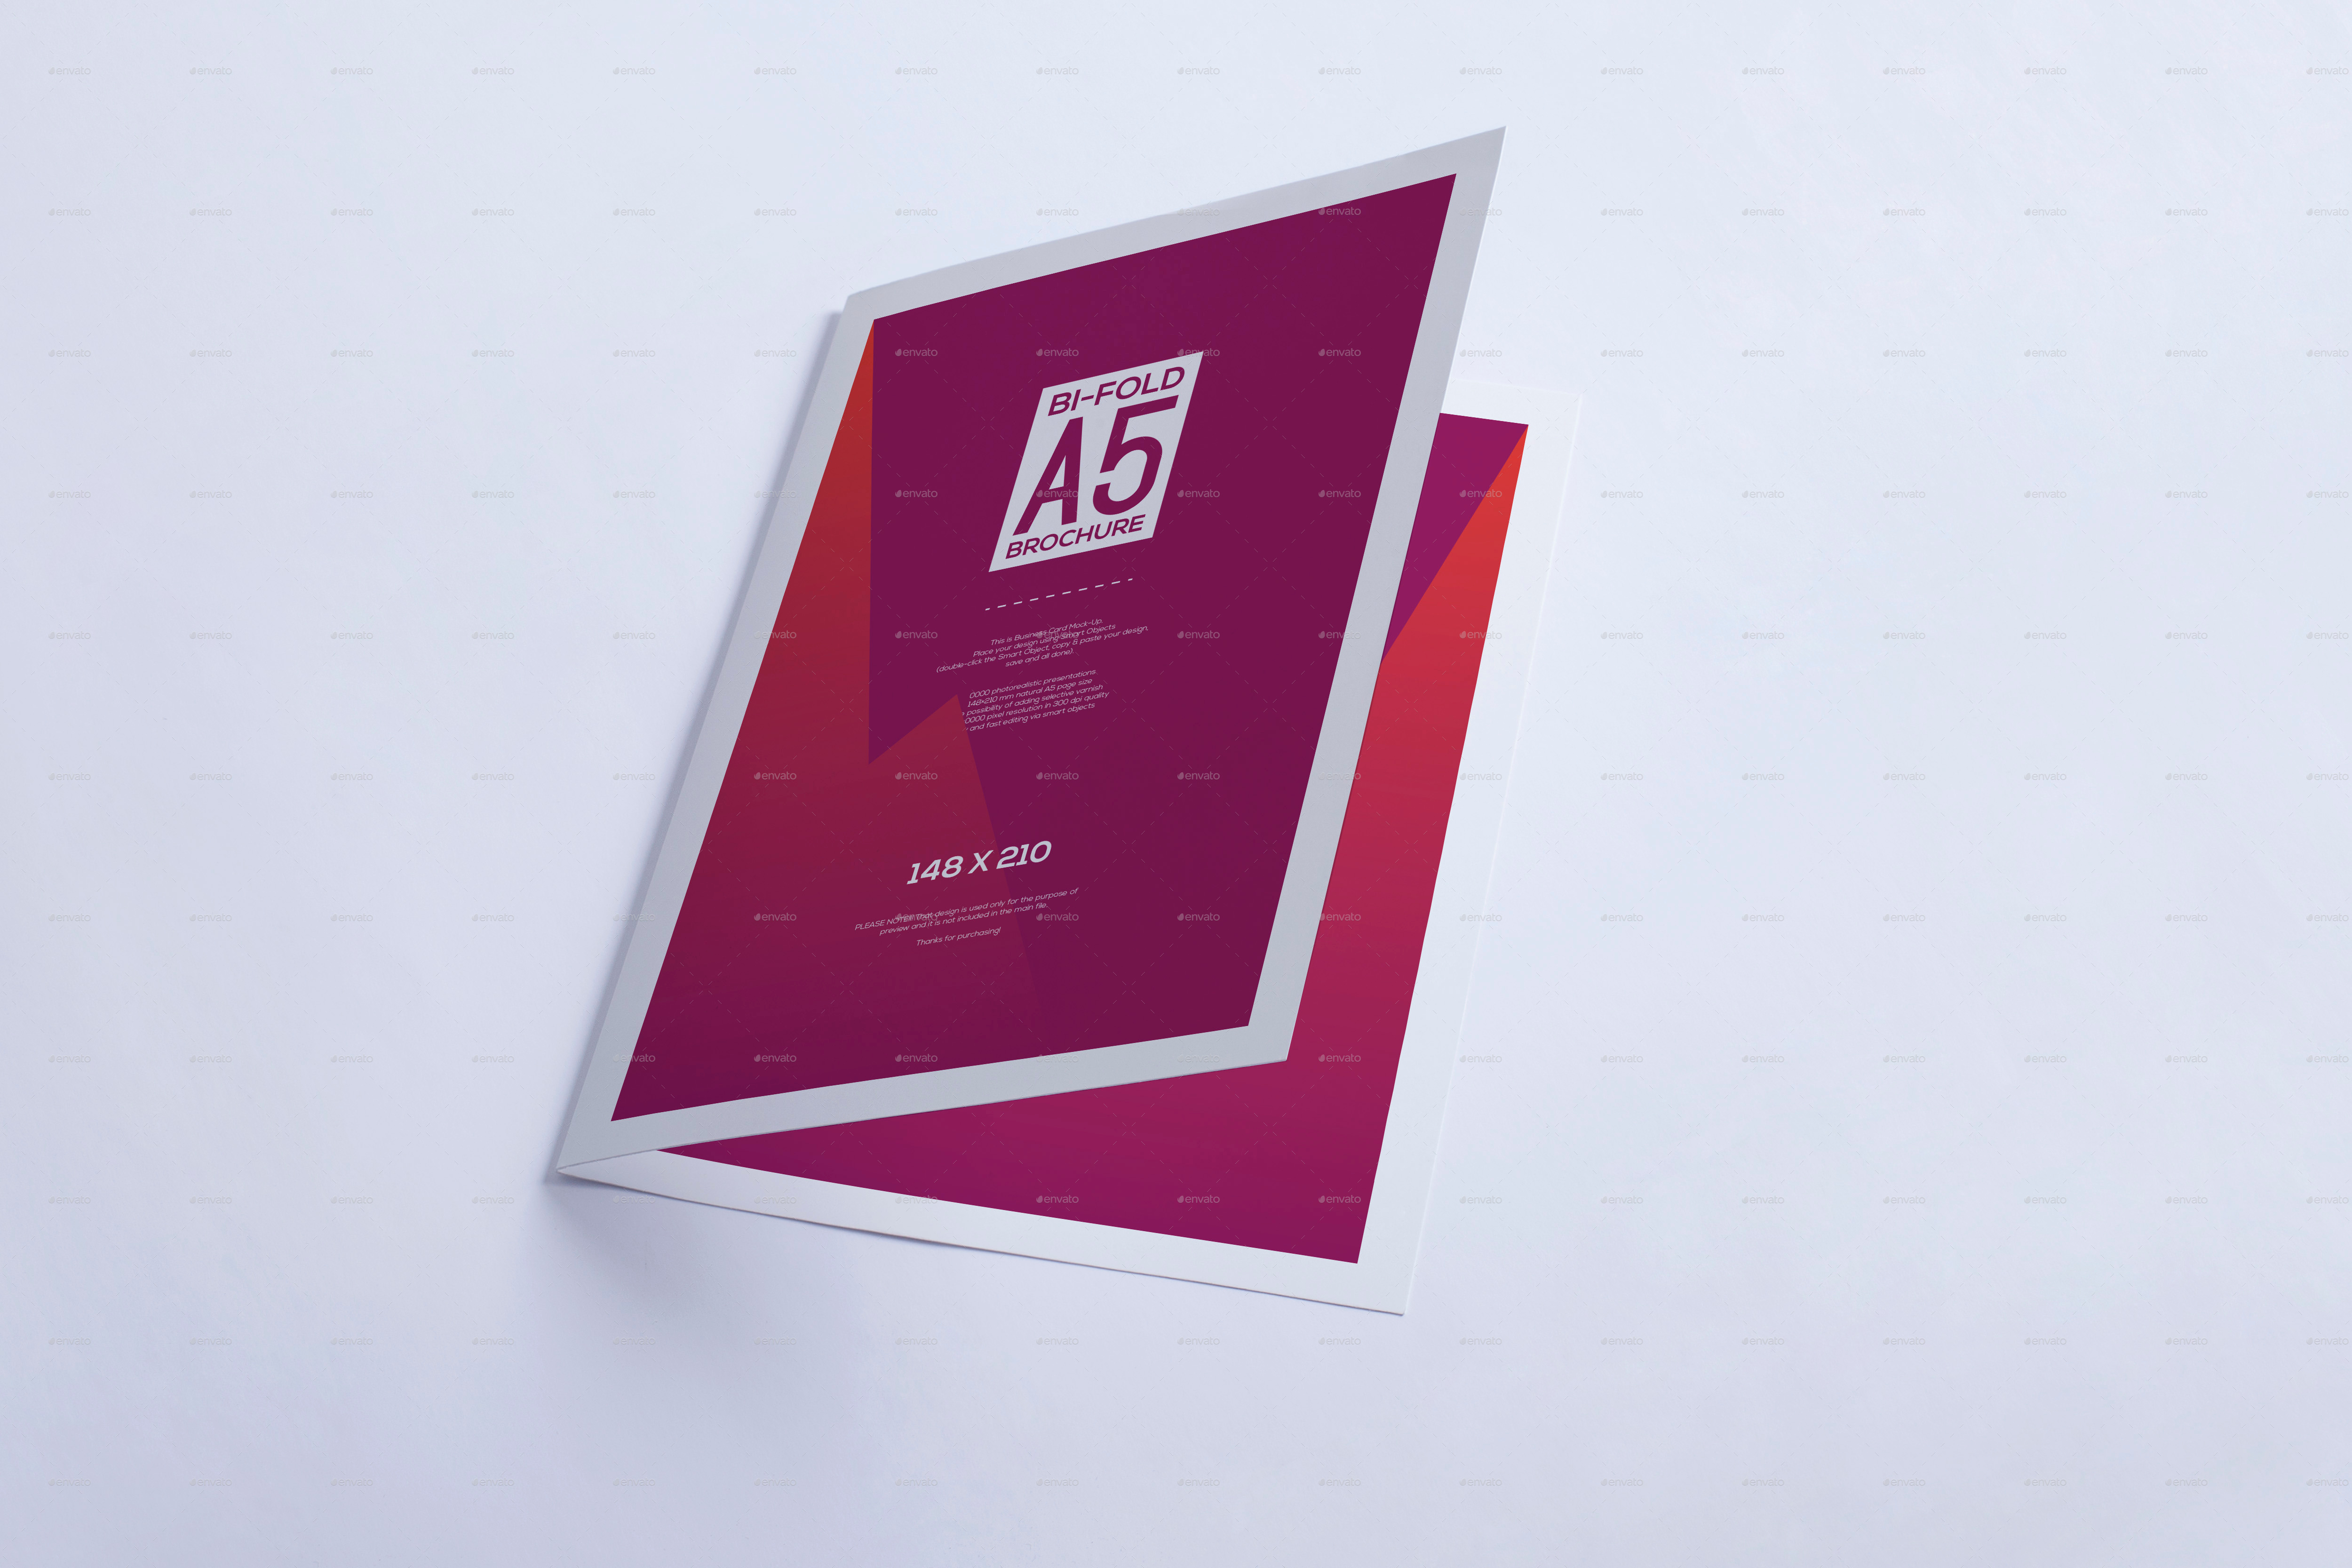 Download Bi-Fold A5 Brochure - Leaflet Mock-up by Xepeec | GraphicRiver